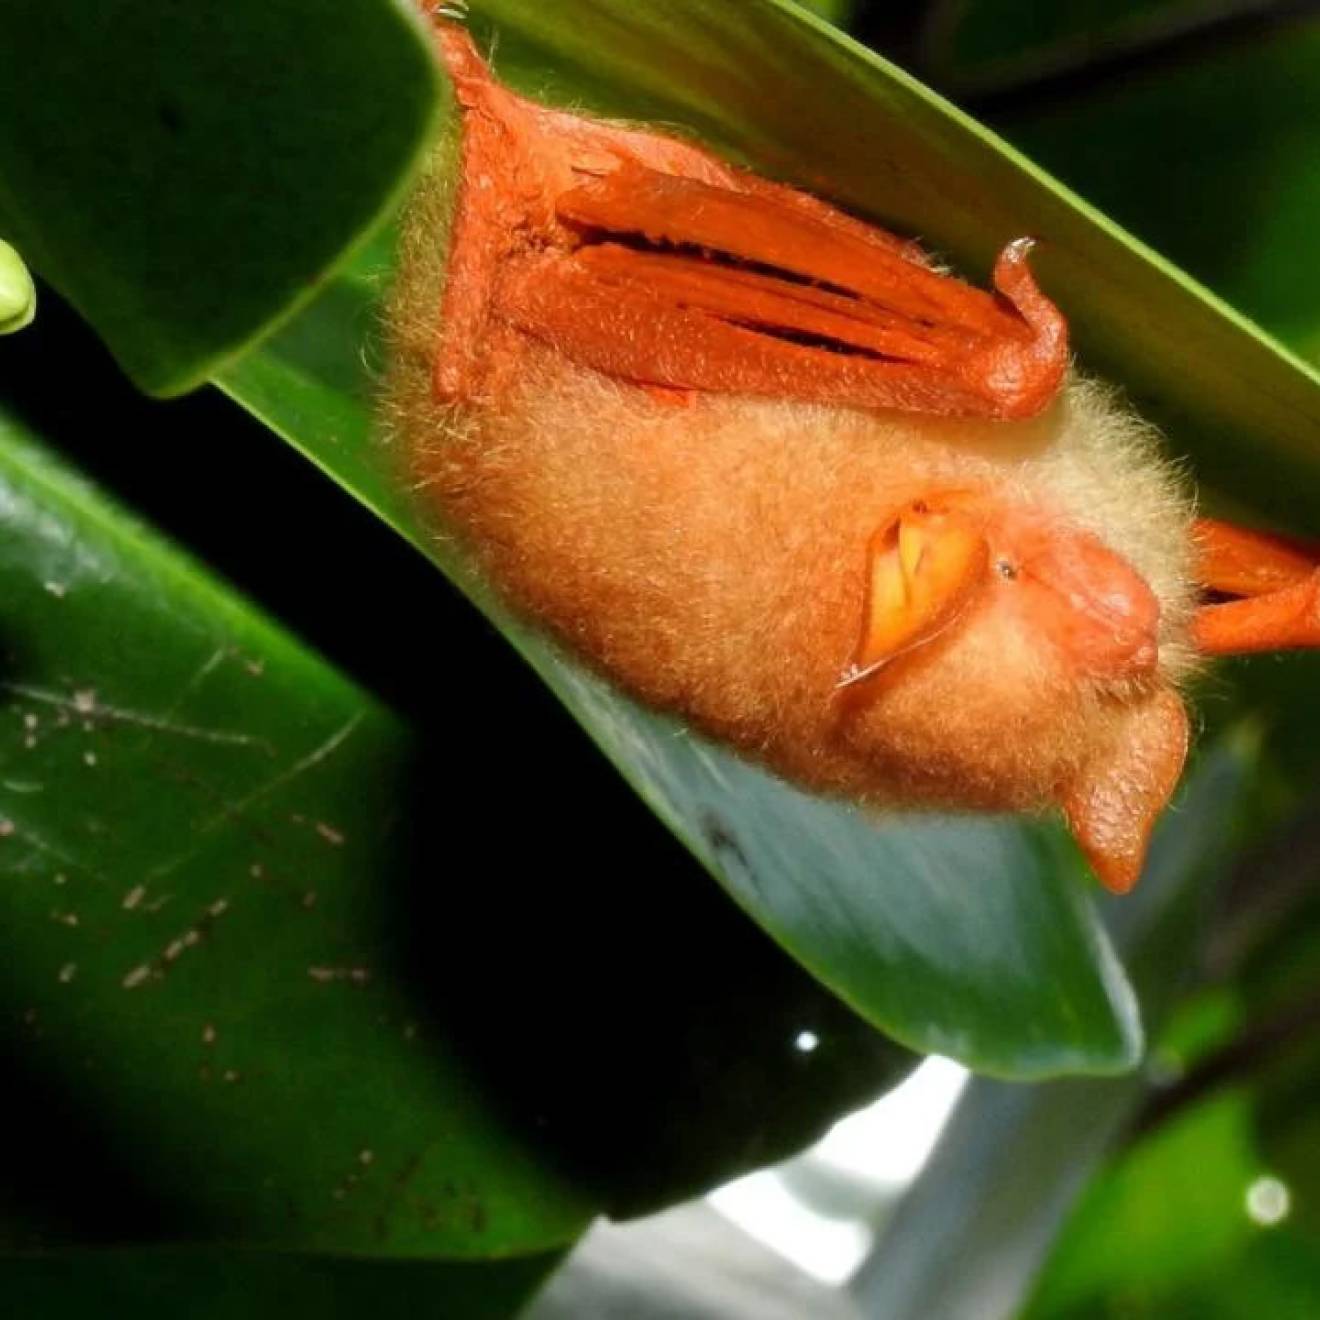 Orange bat hangs upside down from a leaf